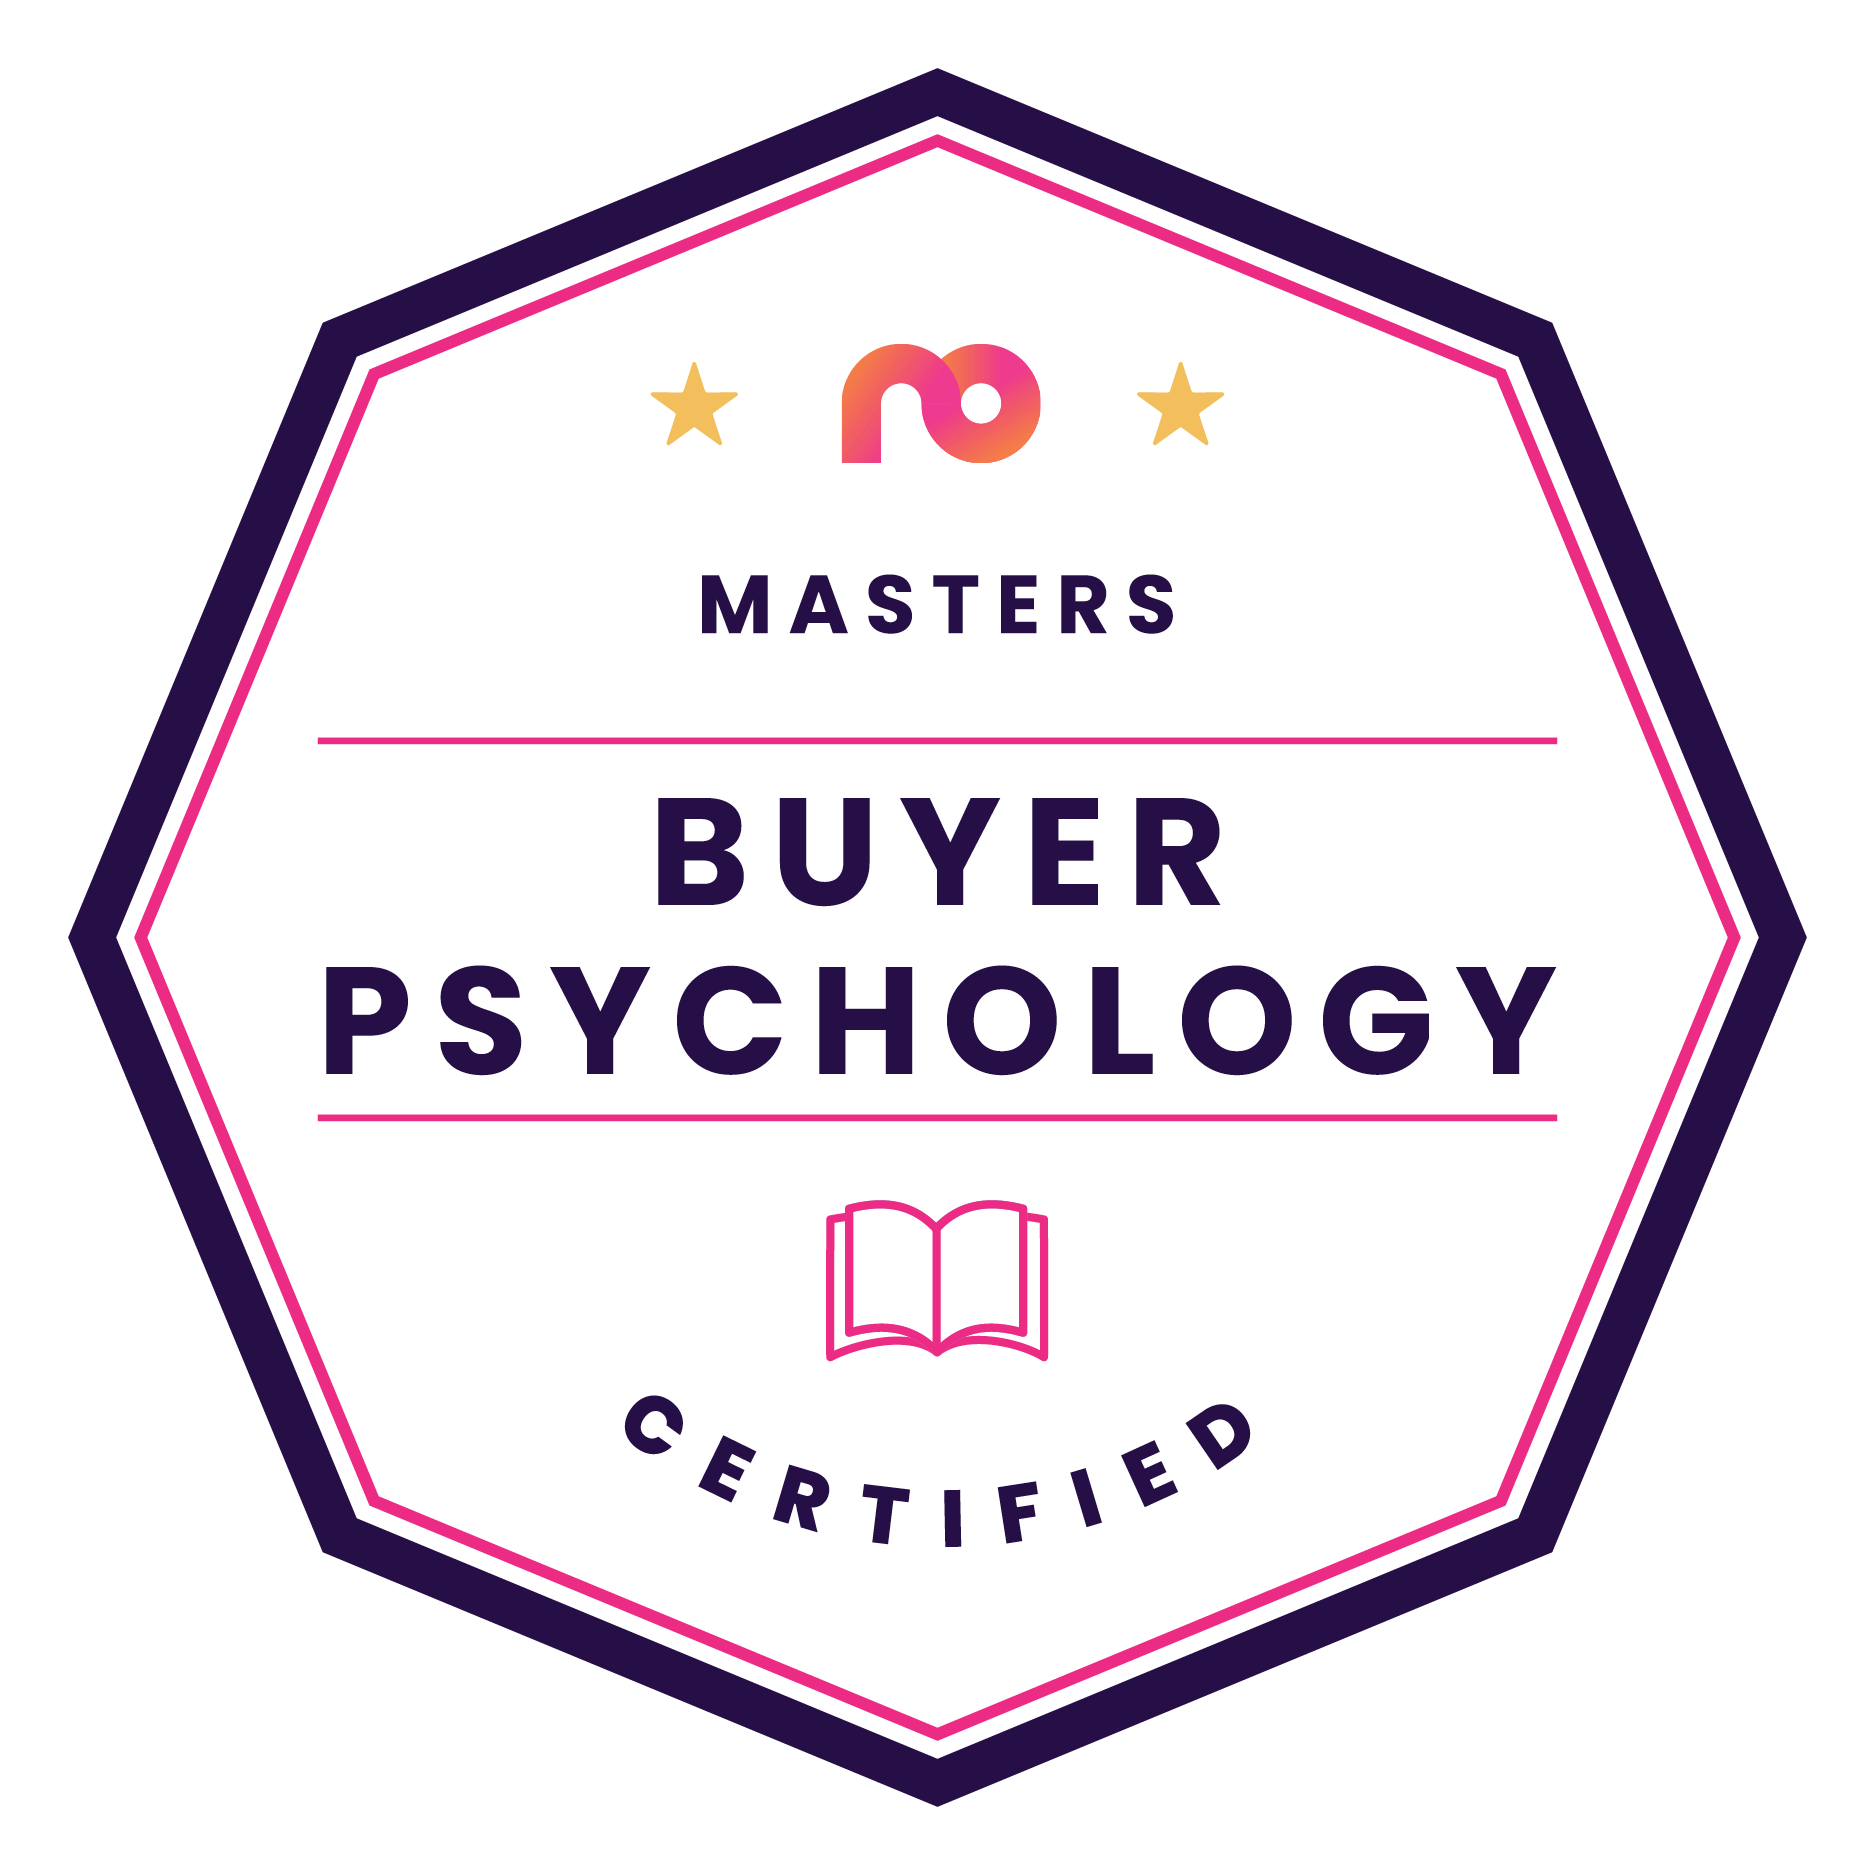 Buyer Psychology Certified | Masters badge